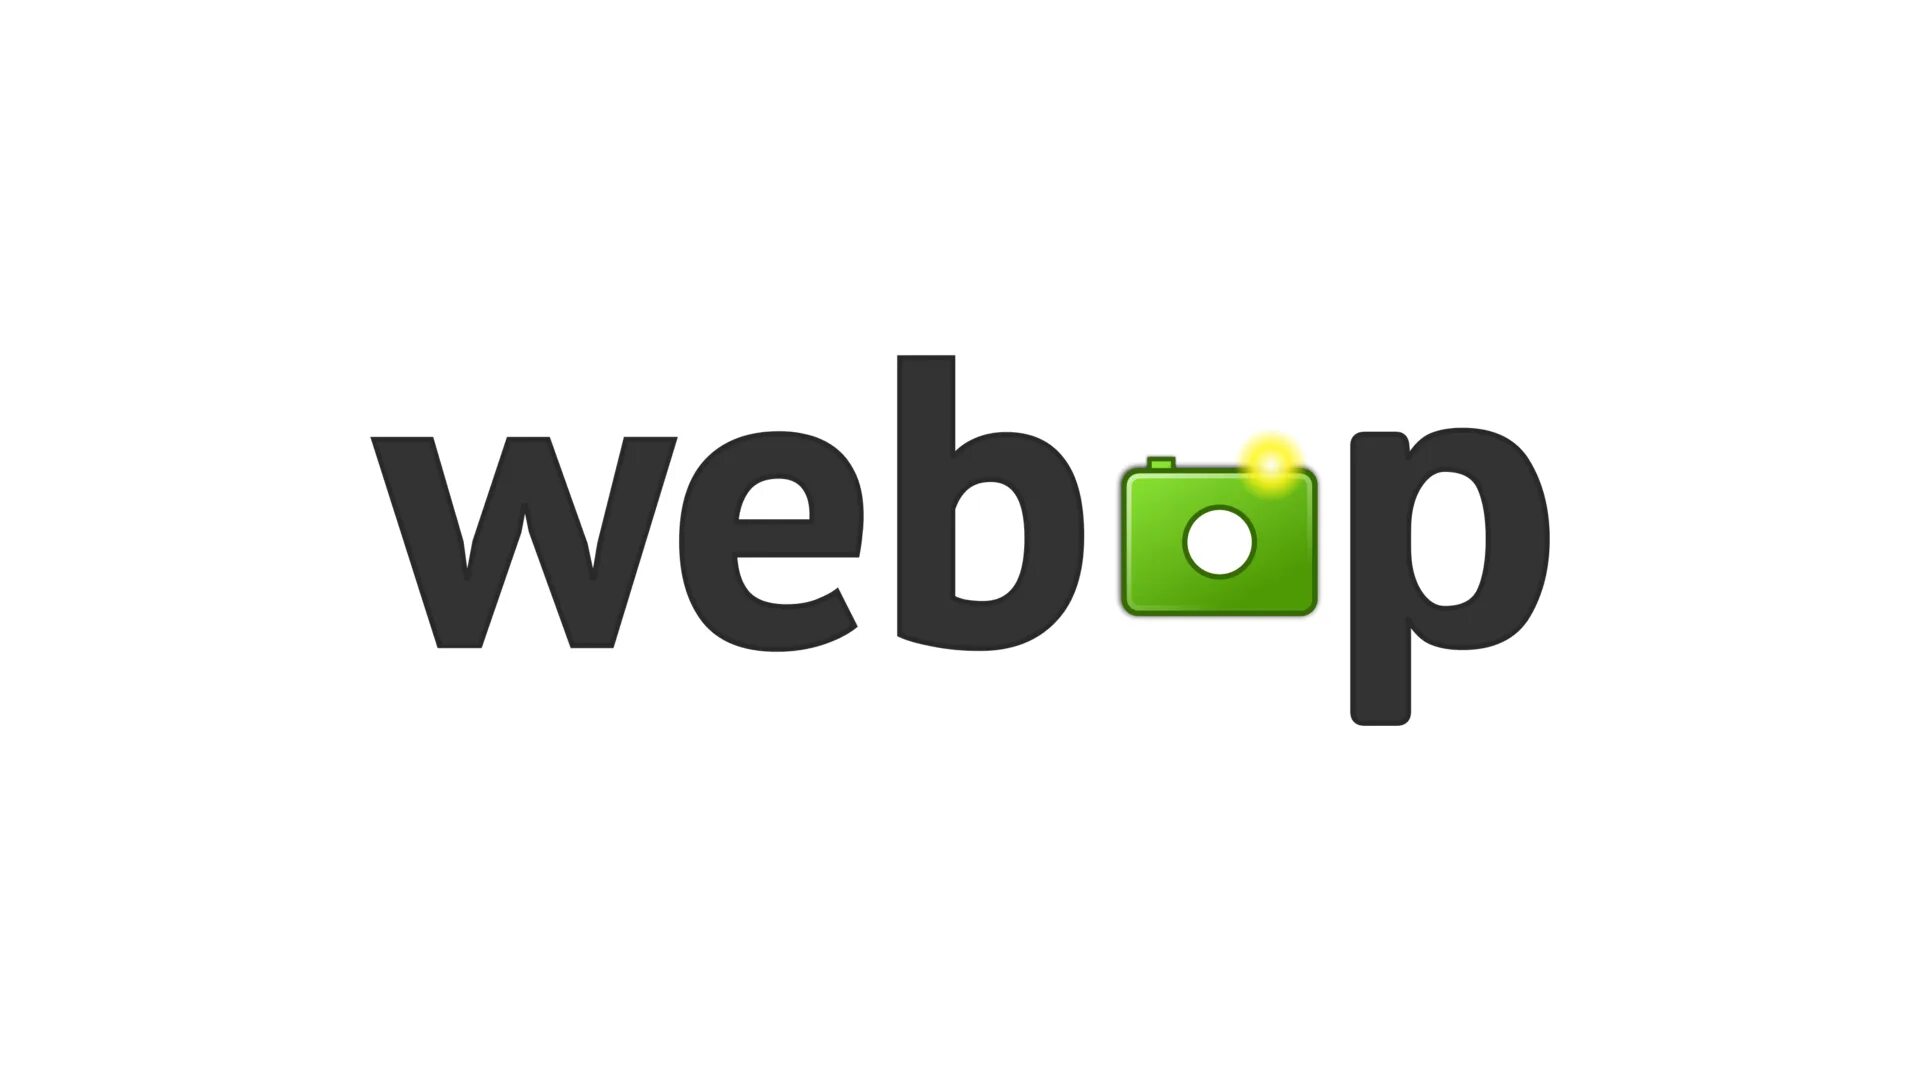 Webp. Webp картинки. Файл webp. Картинки в формате webp.